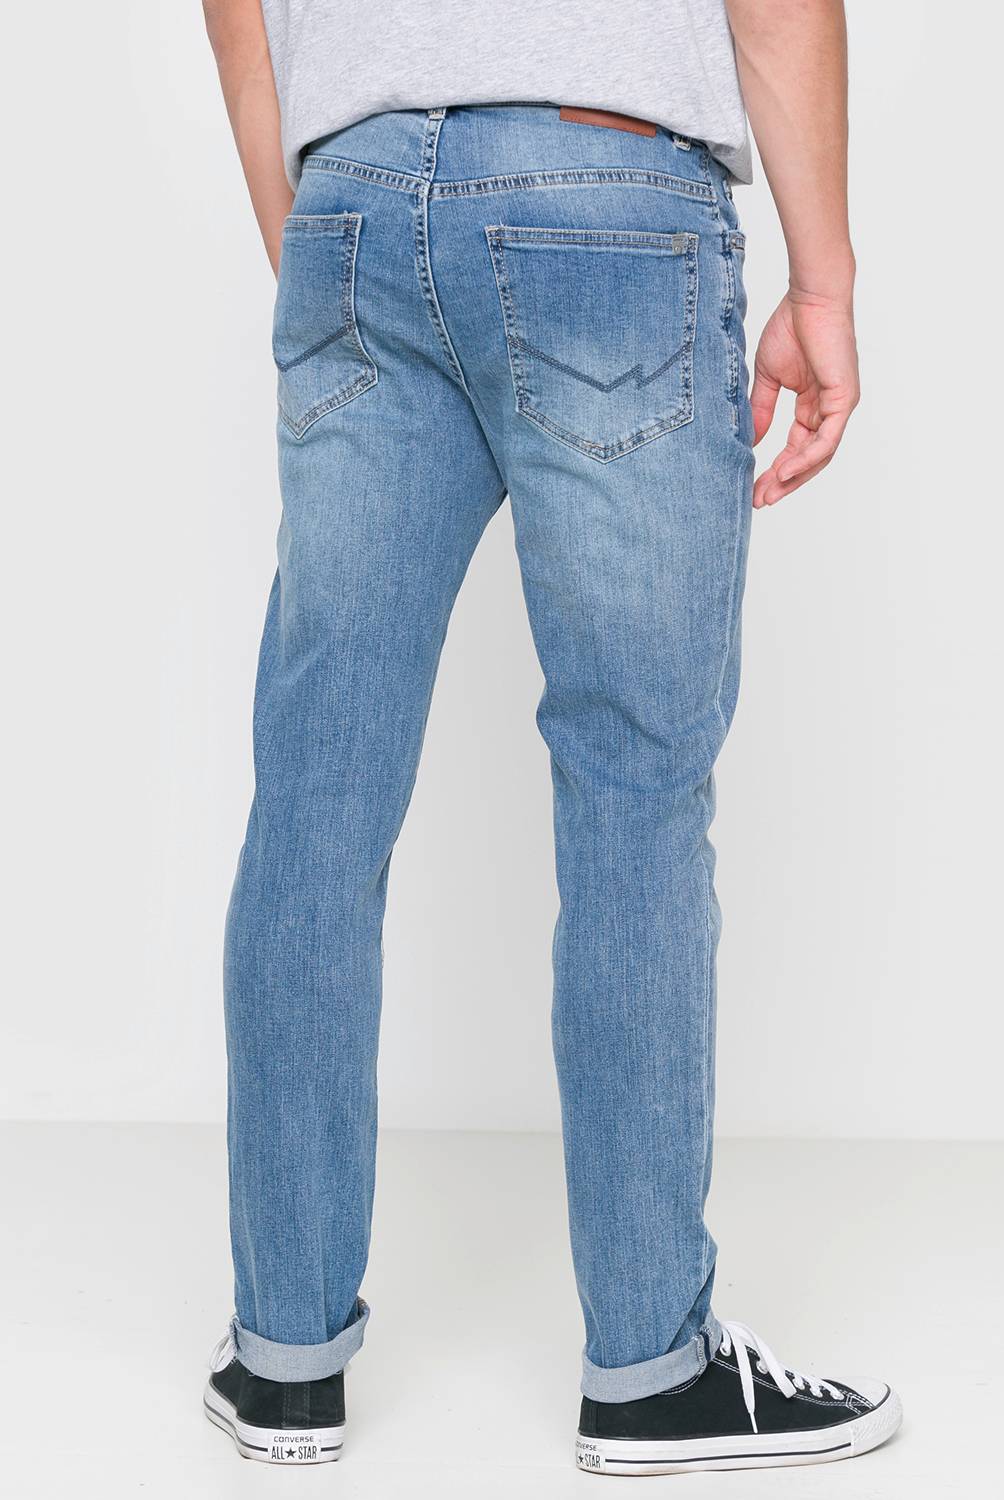 Americanino - Jeans Super Skinny